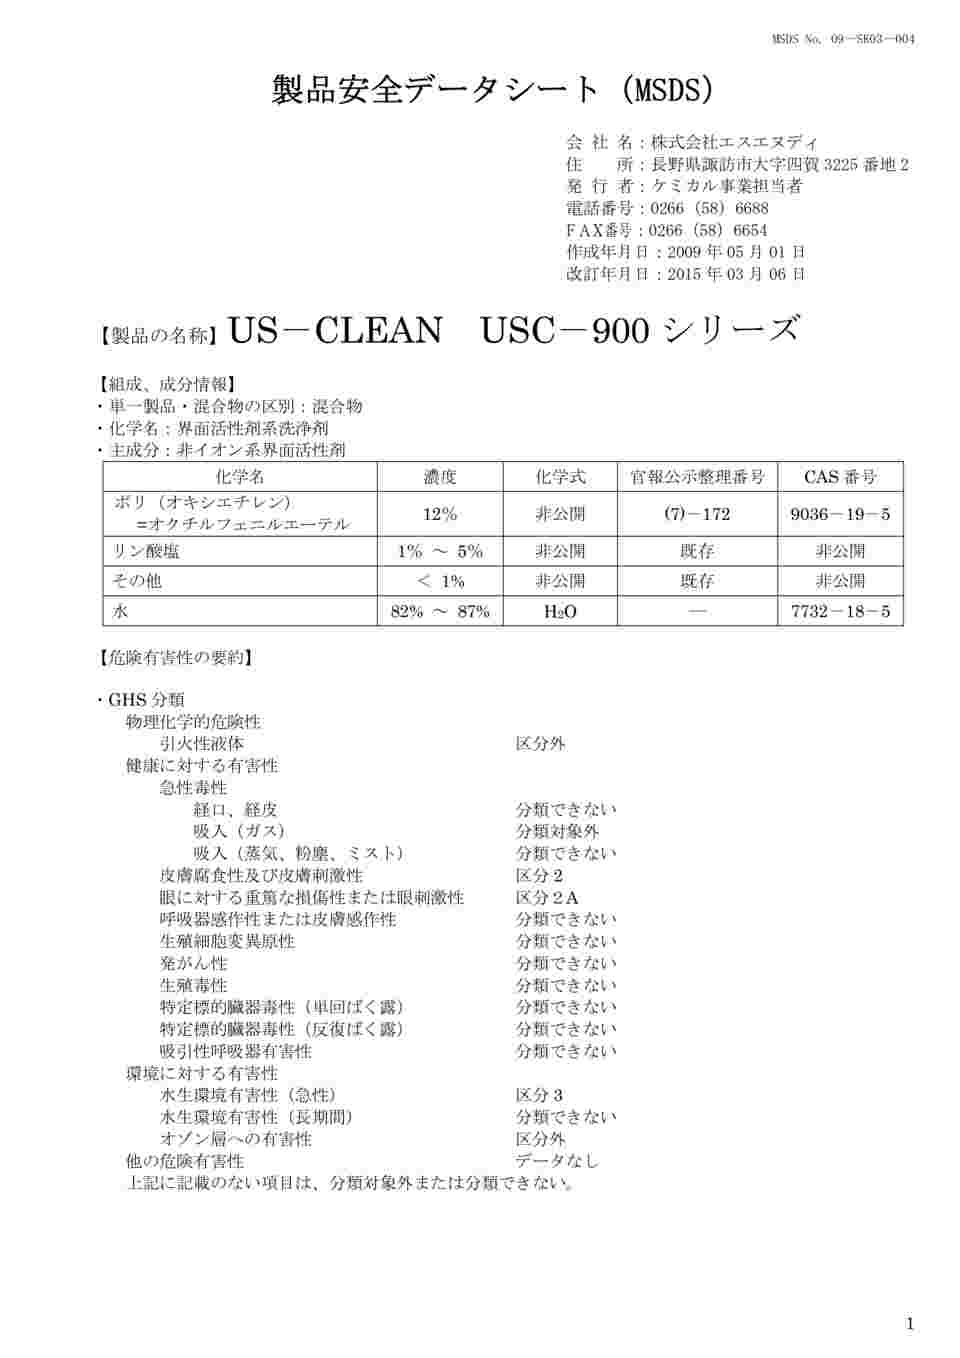 61-0084-93 US-CLEAN 水系脱脂用洗浄剤 スタンダードモデル 水溶性加工油脱脂用 USC-900シリーズ （一斗缶タイプ） USC-918